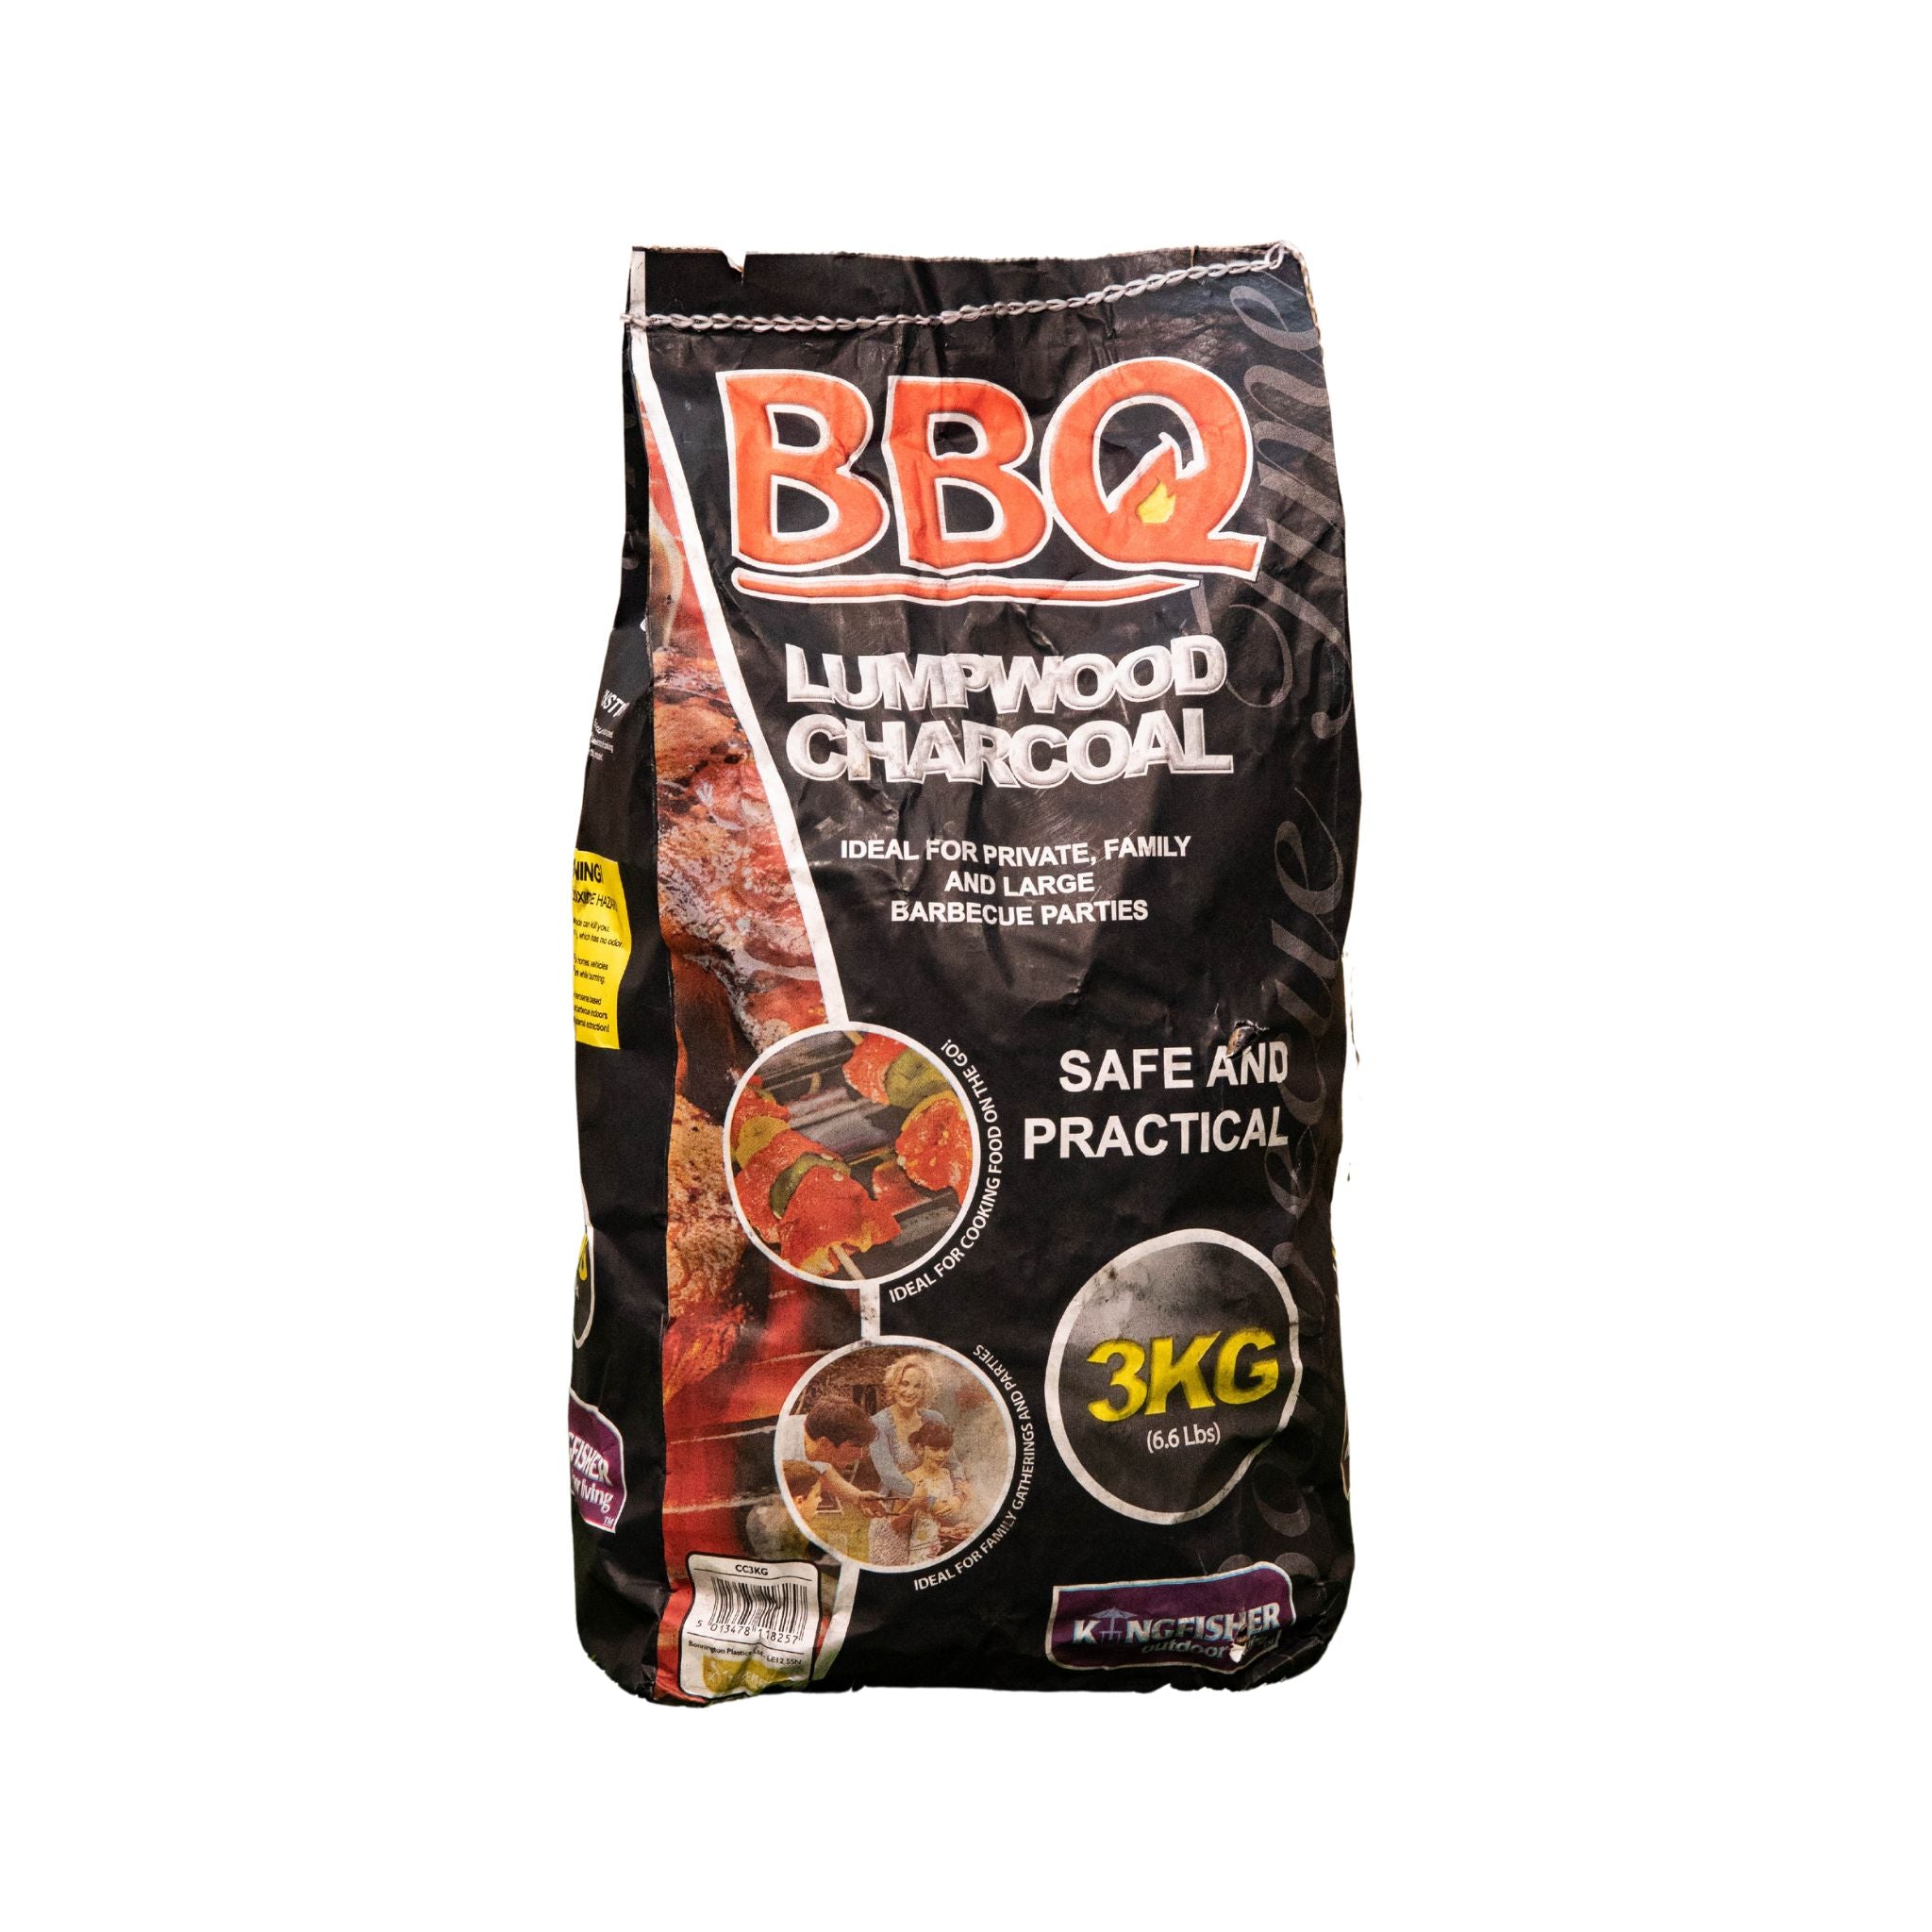 3kg Lumpwood Charcoal for Barbecues / BBQs Coal